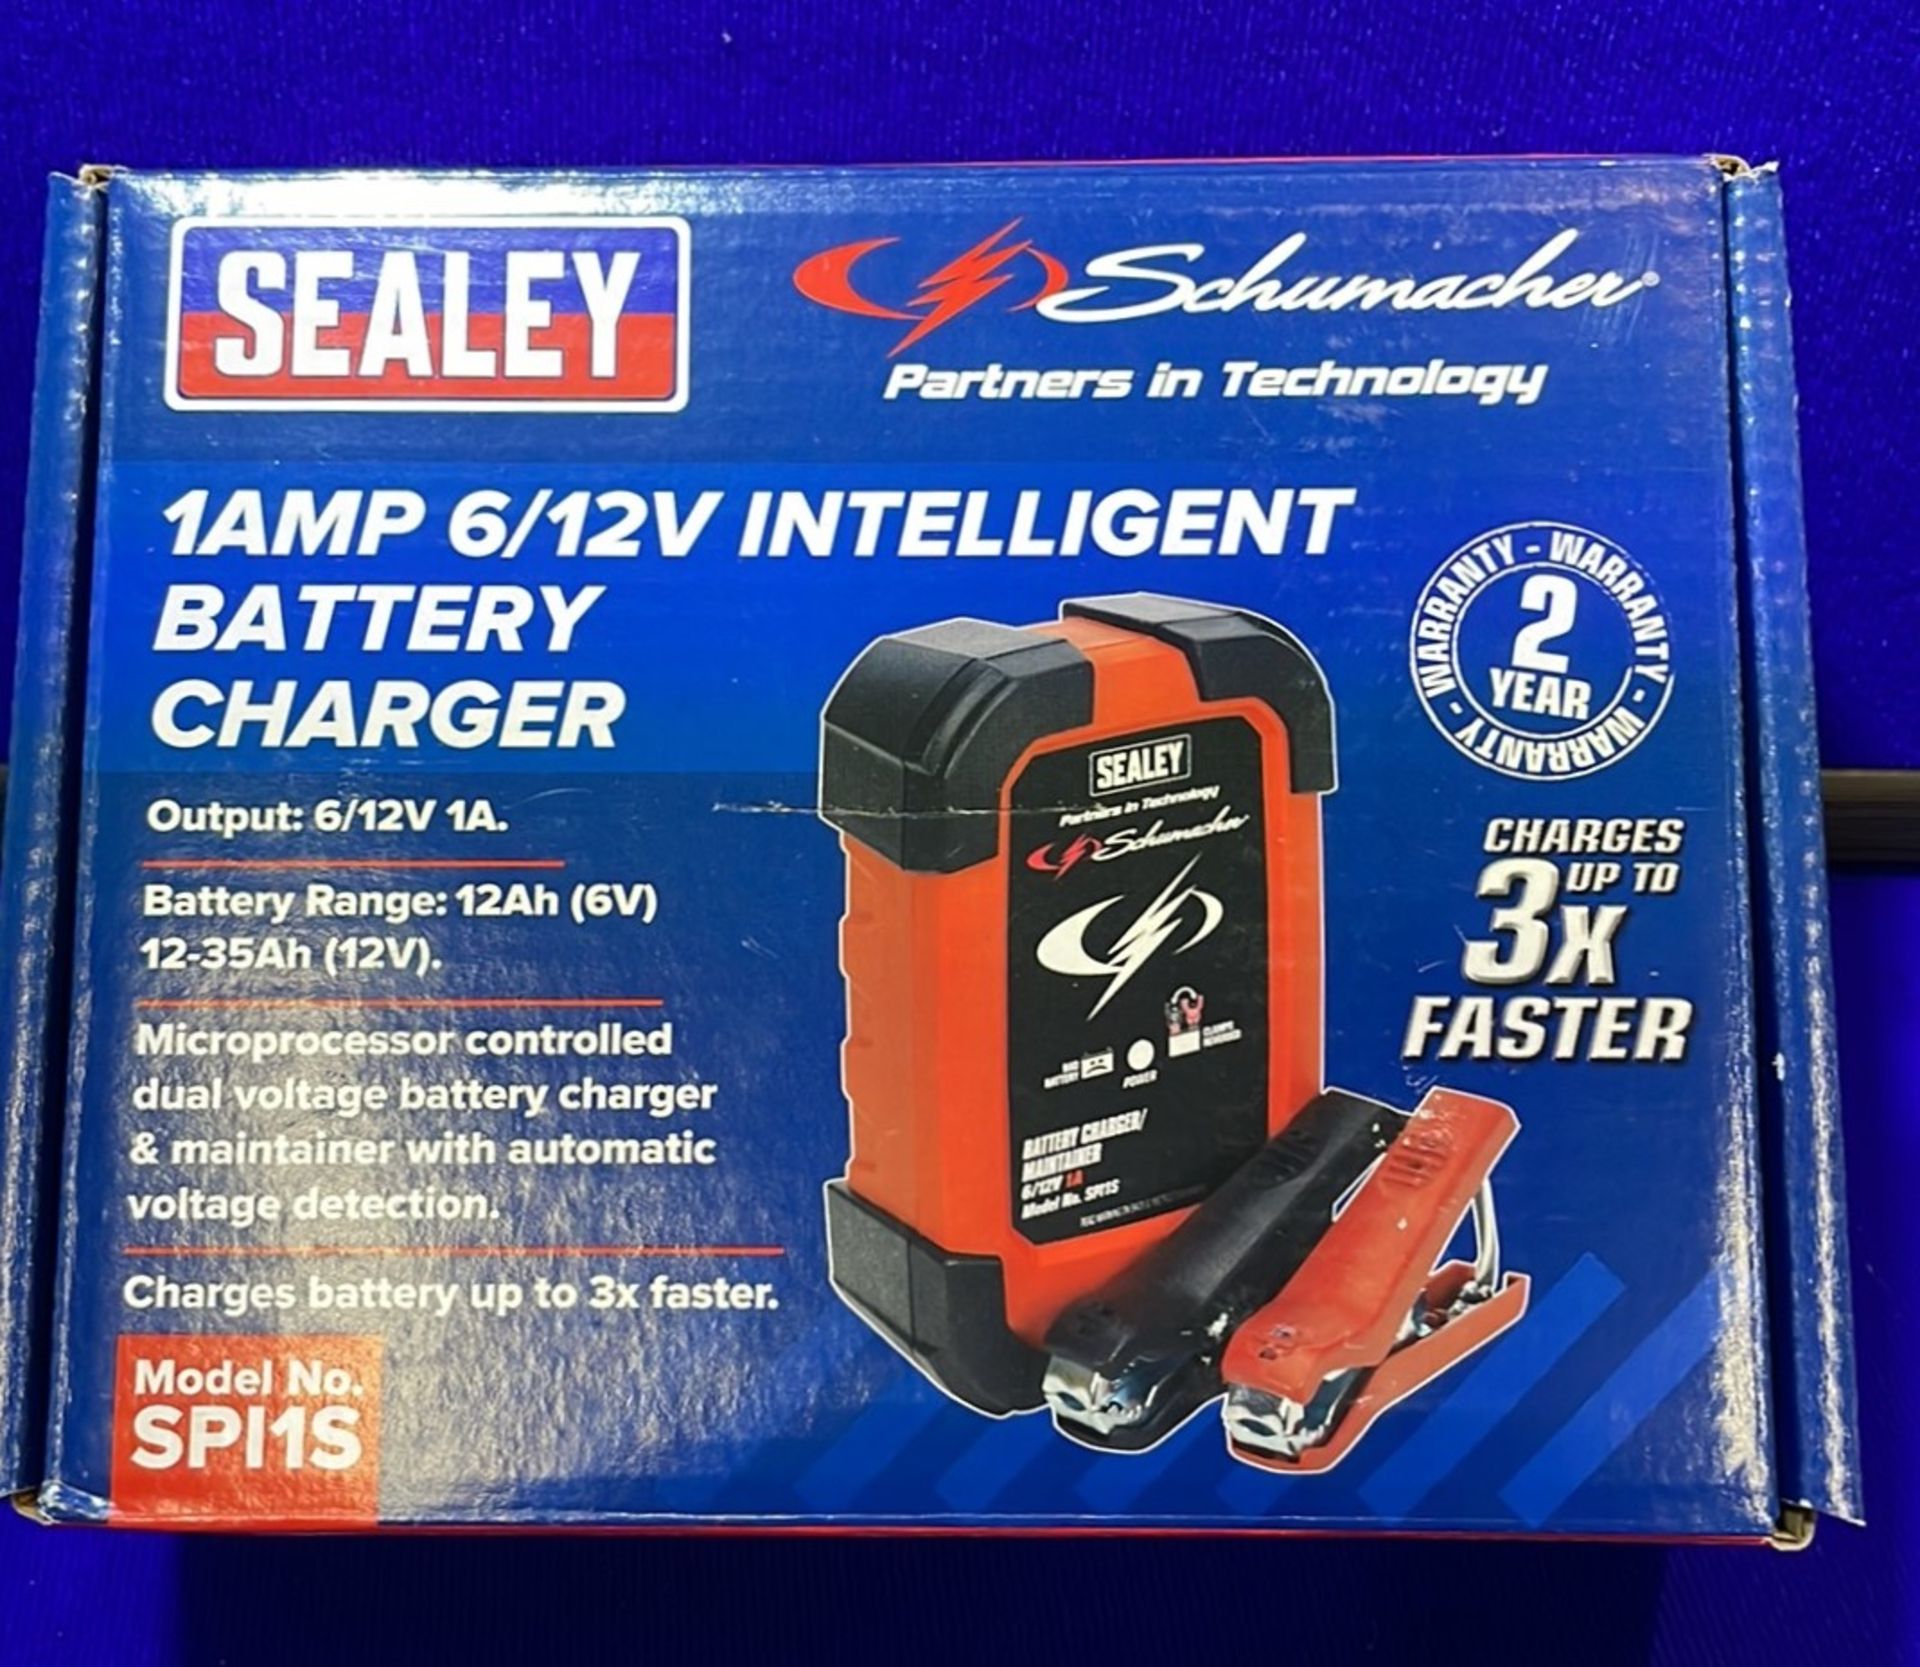 3 x Sealey Schumacher Intelligent Battery Charger 1A 6/2V SPi1S